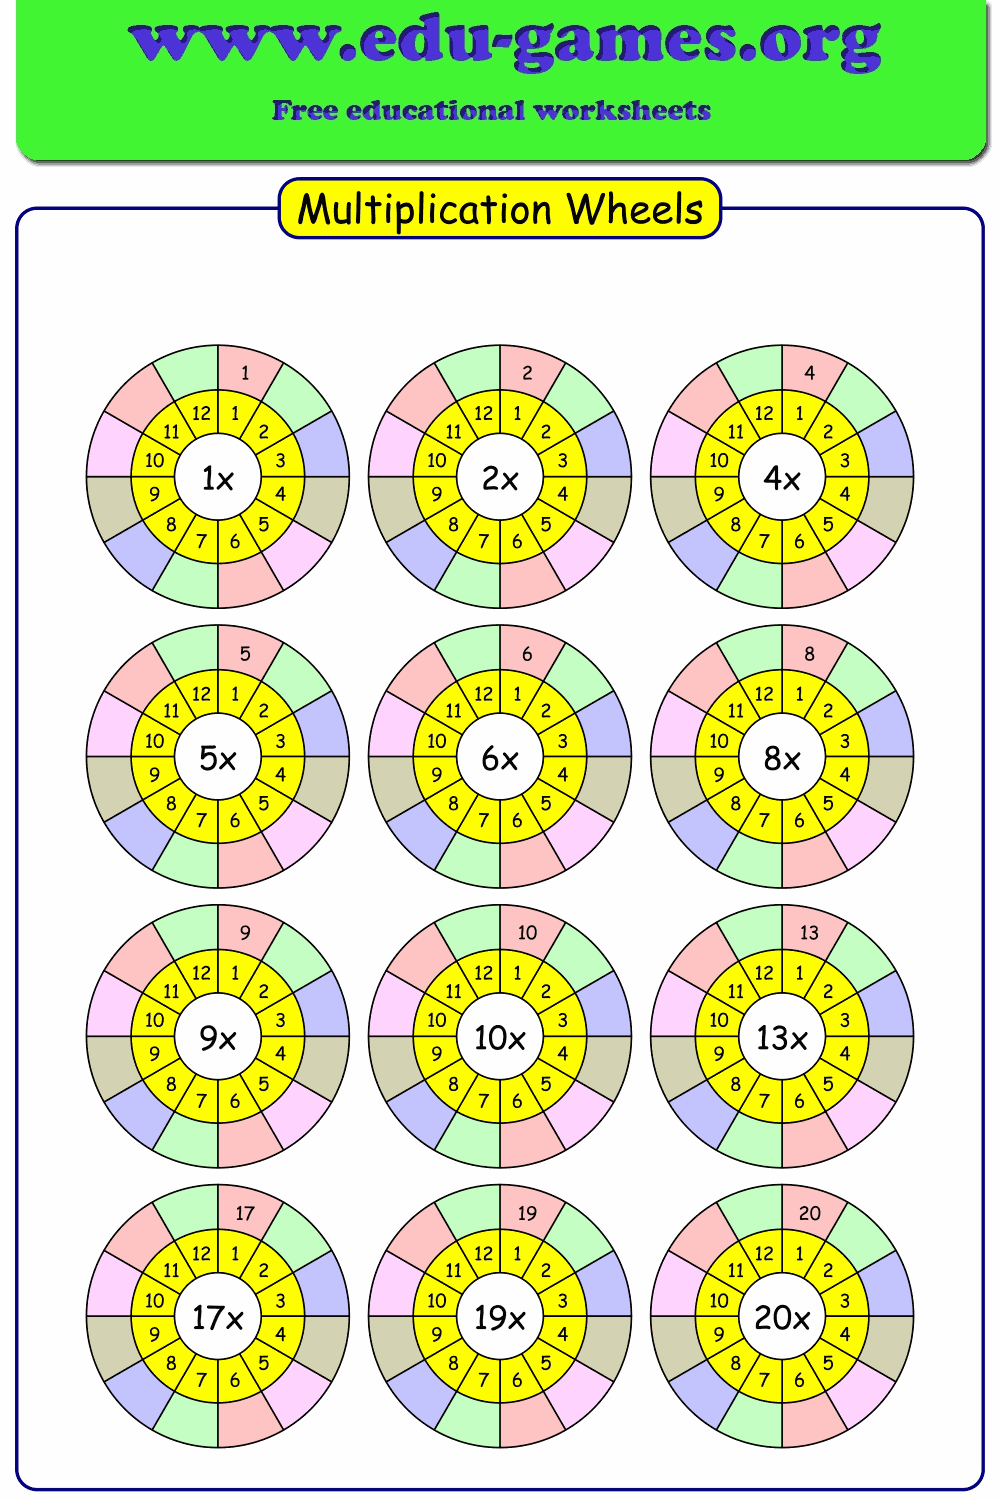  multiplication wheels png